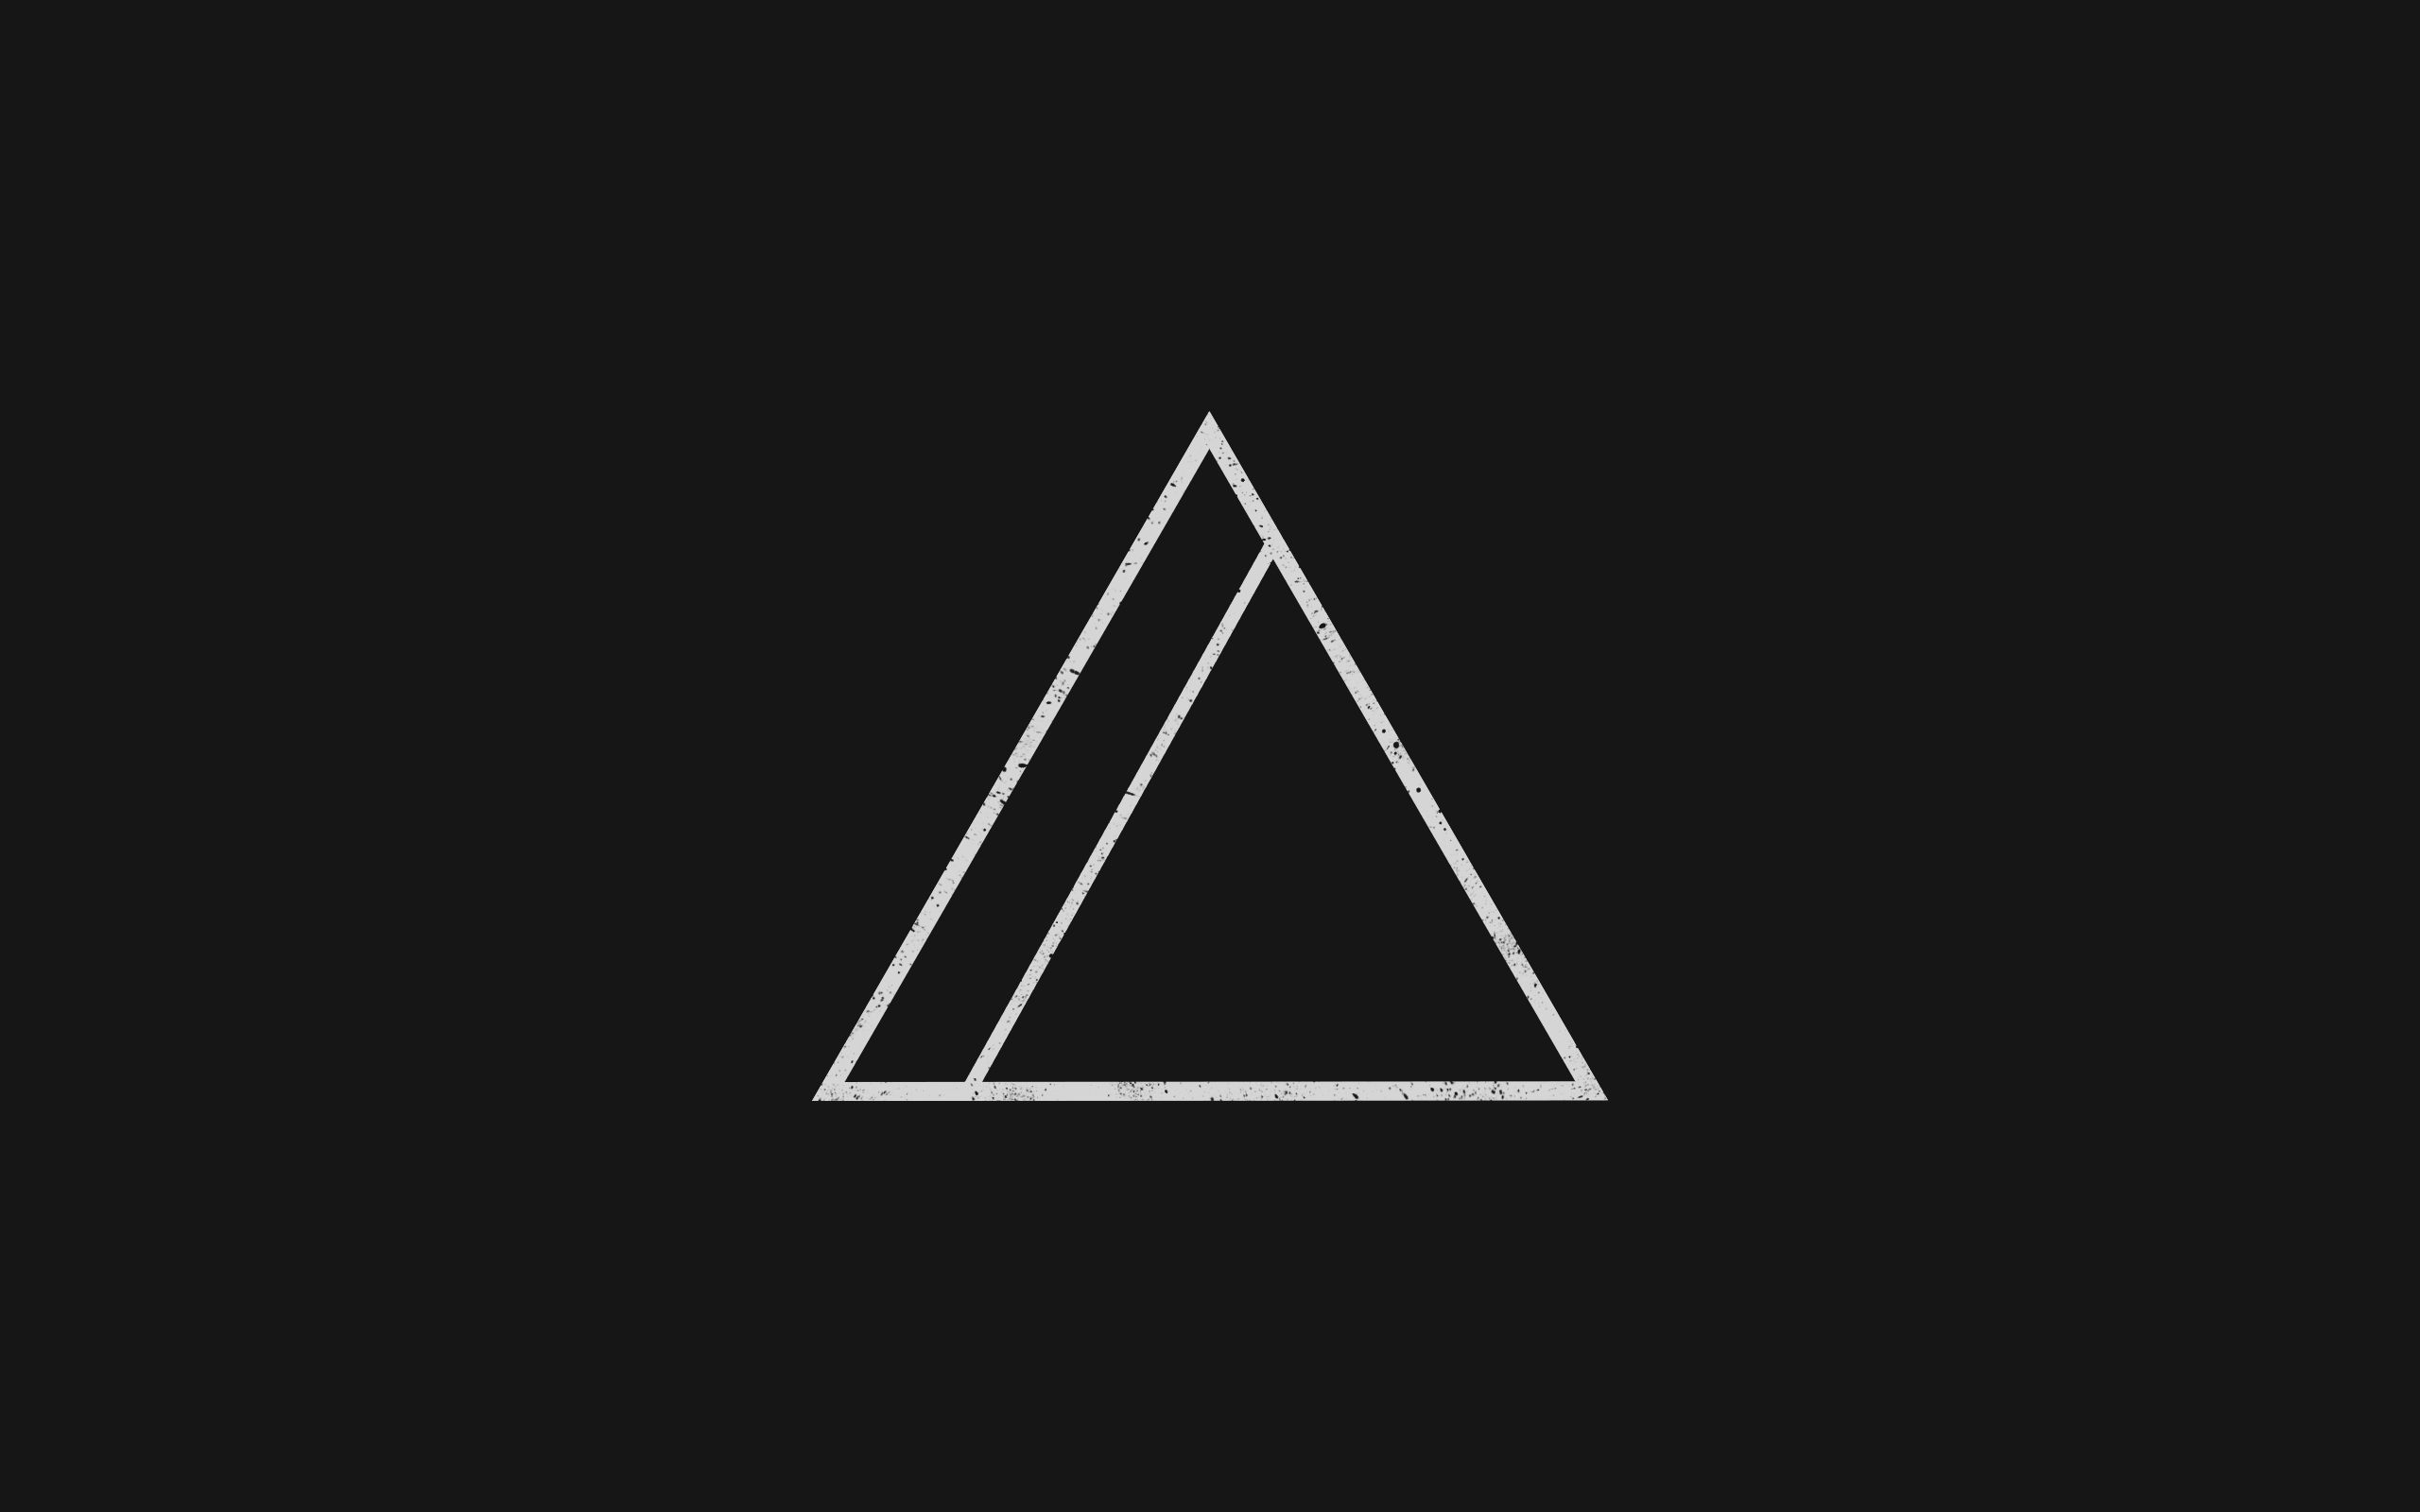 General 2560x1600 minimalism geometry black background triangle